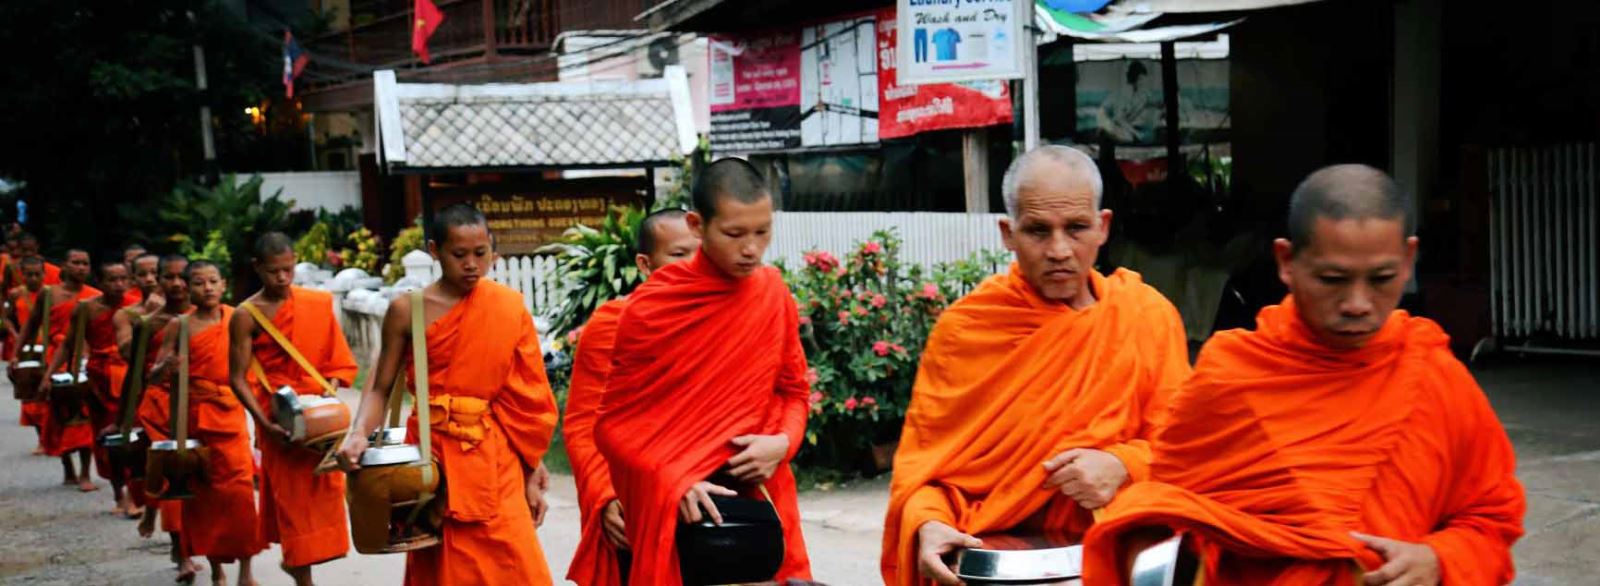 2. Partecipare al Tak Bat, la questua mattutina dei monaci.